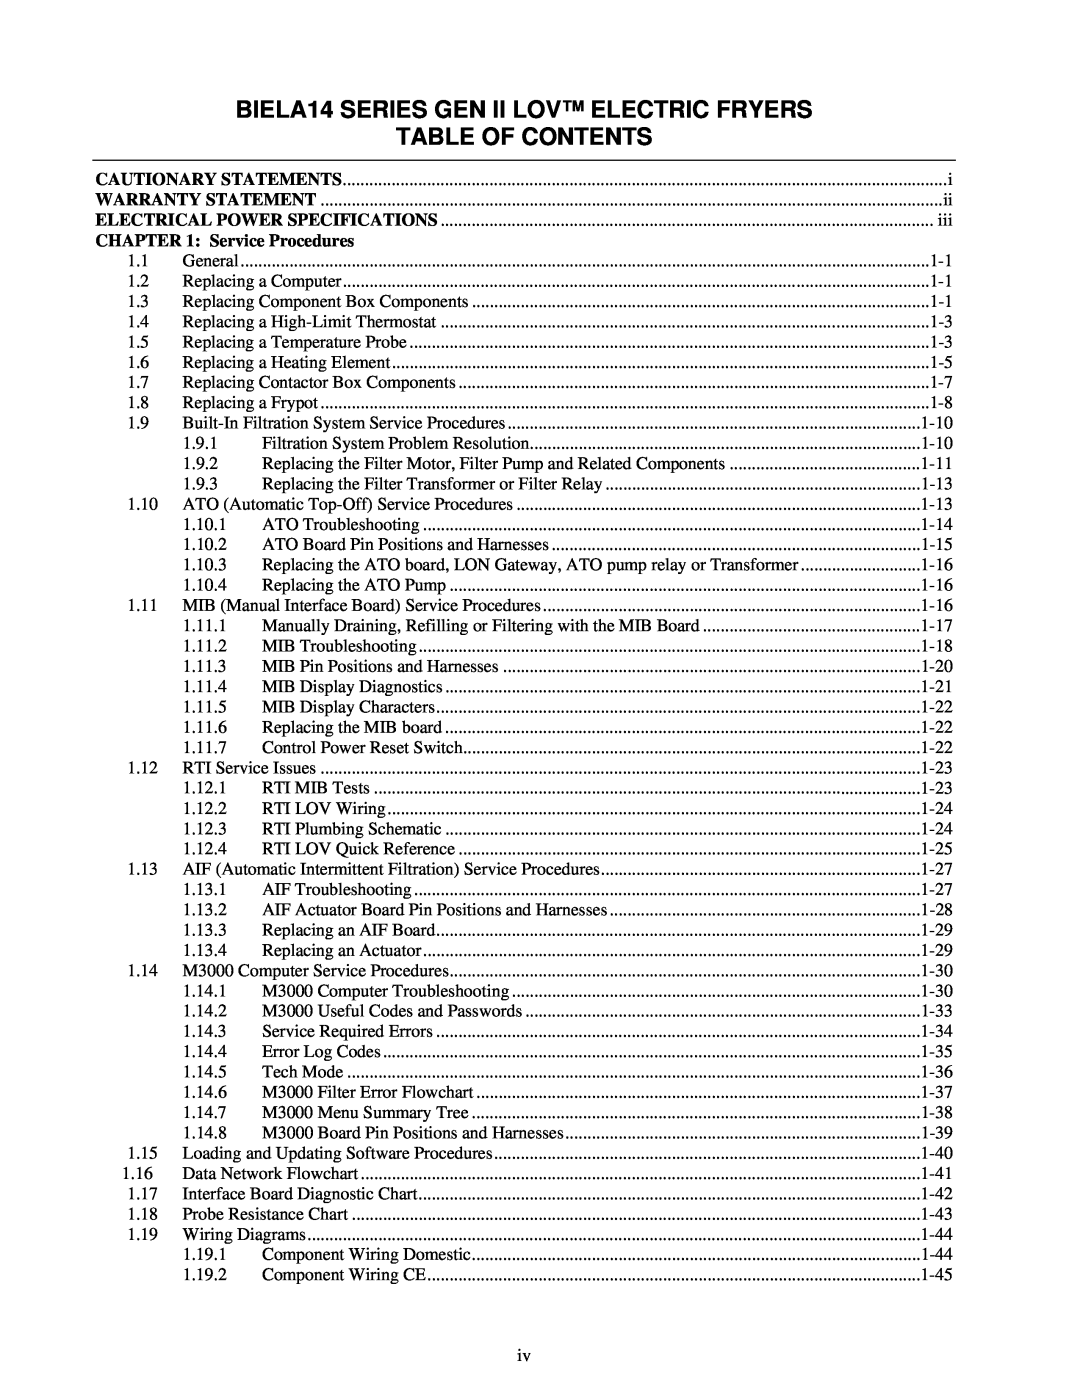 Frymaster manual BIELA14 SERIES GEN II LOV ELECTRIC FRYERS, Table Of Contents, Service Procedures 